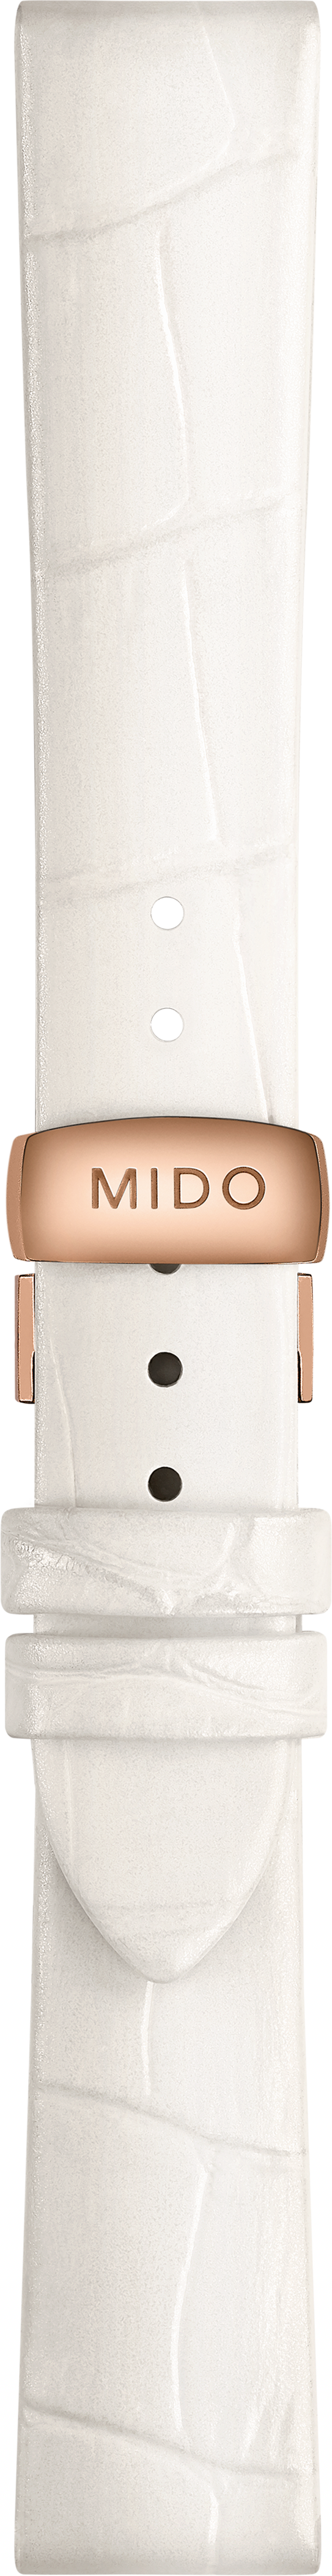 Mido Rainflower weißes Rindsleder-Armband